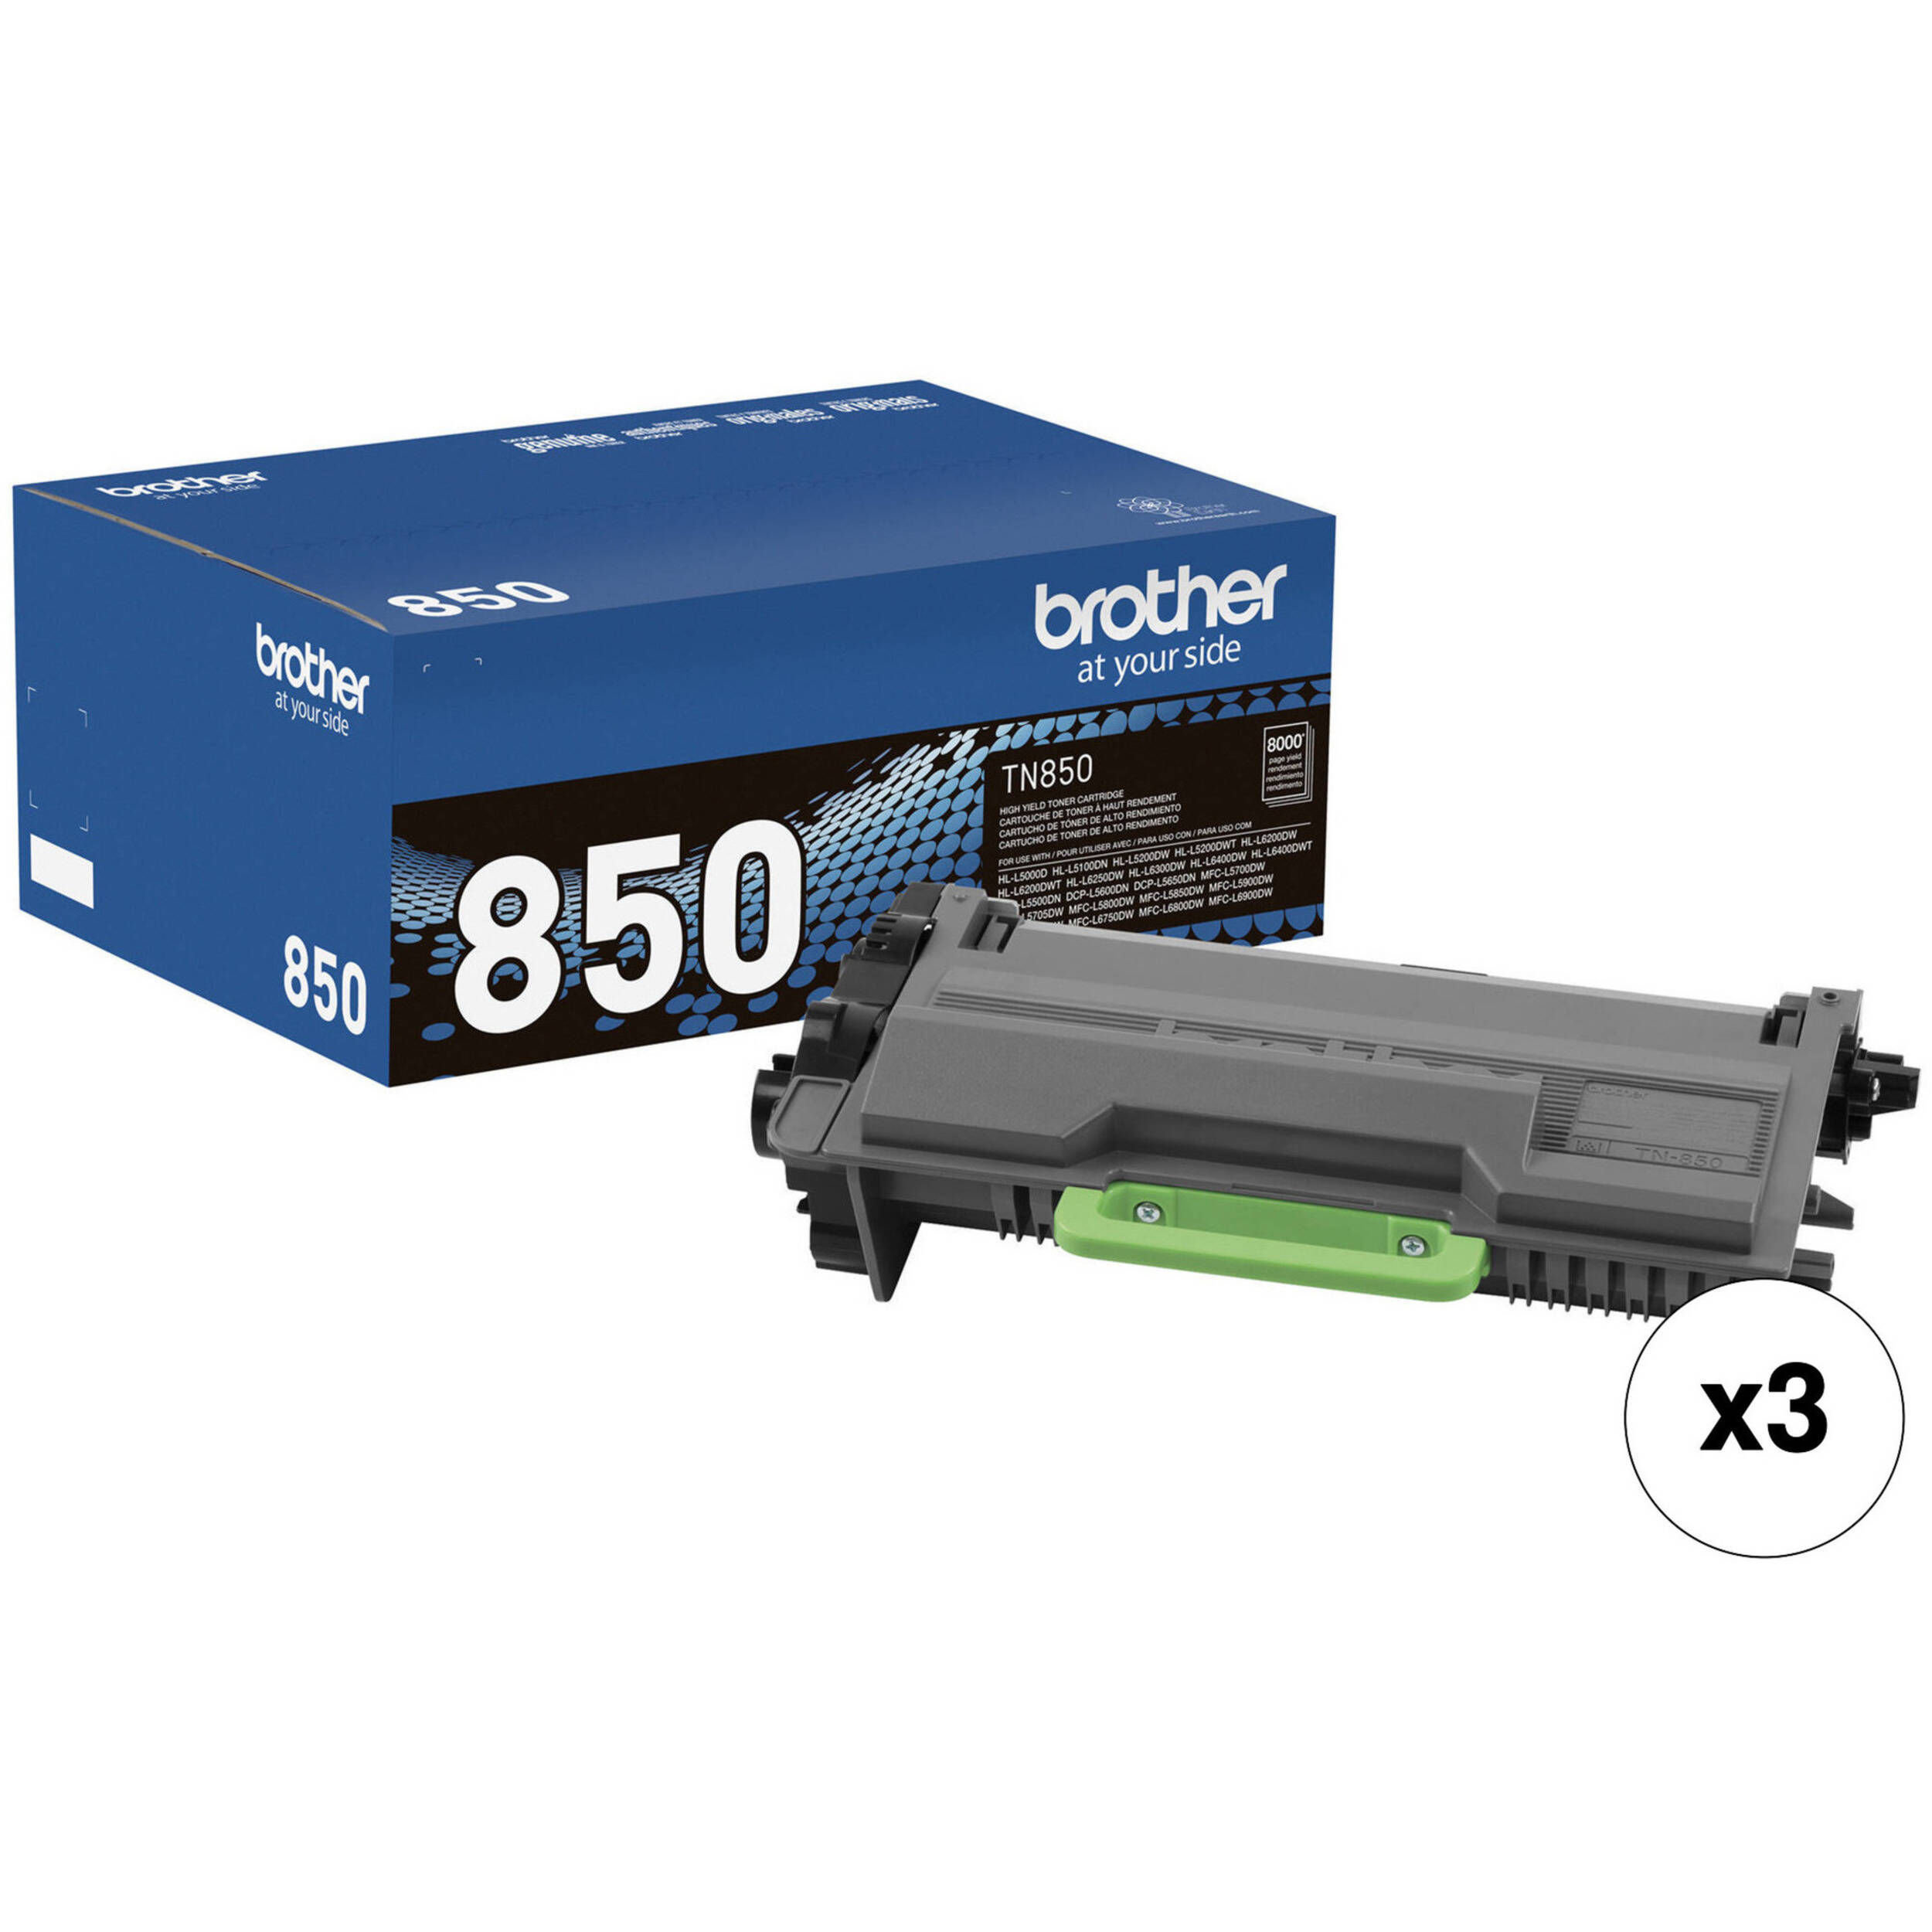 brother laser printer toner cartridge